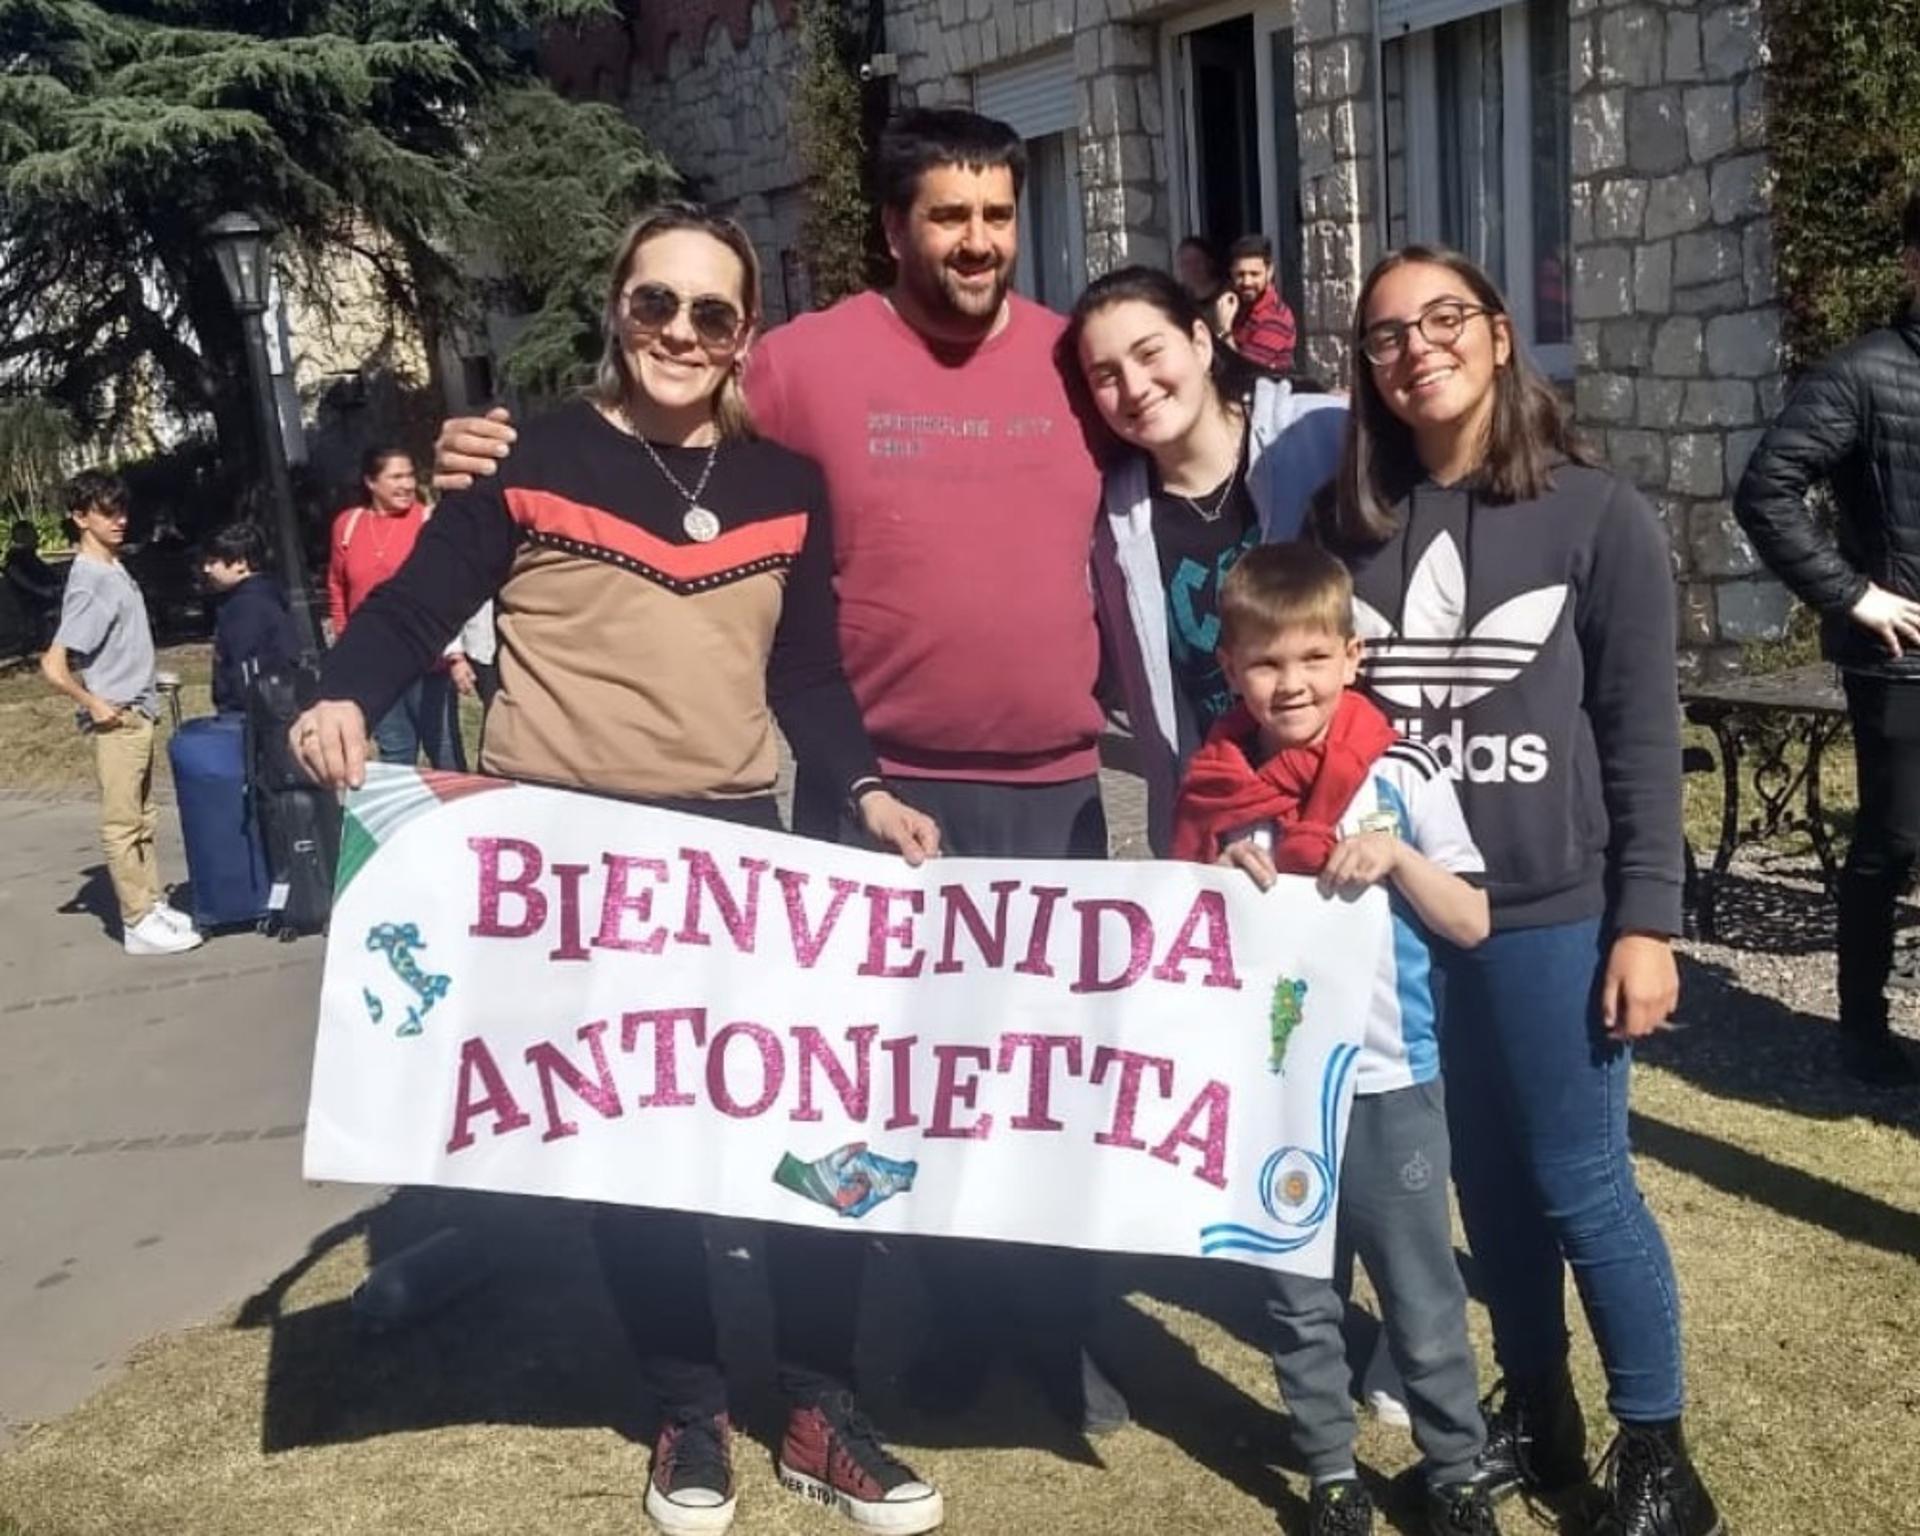 antonietta-exchange-student-zainetto-verde-anno-scolastico-argentina-6.jpg